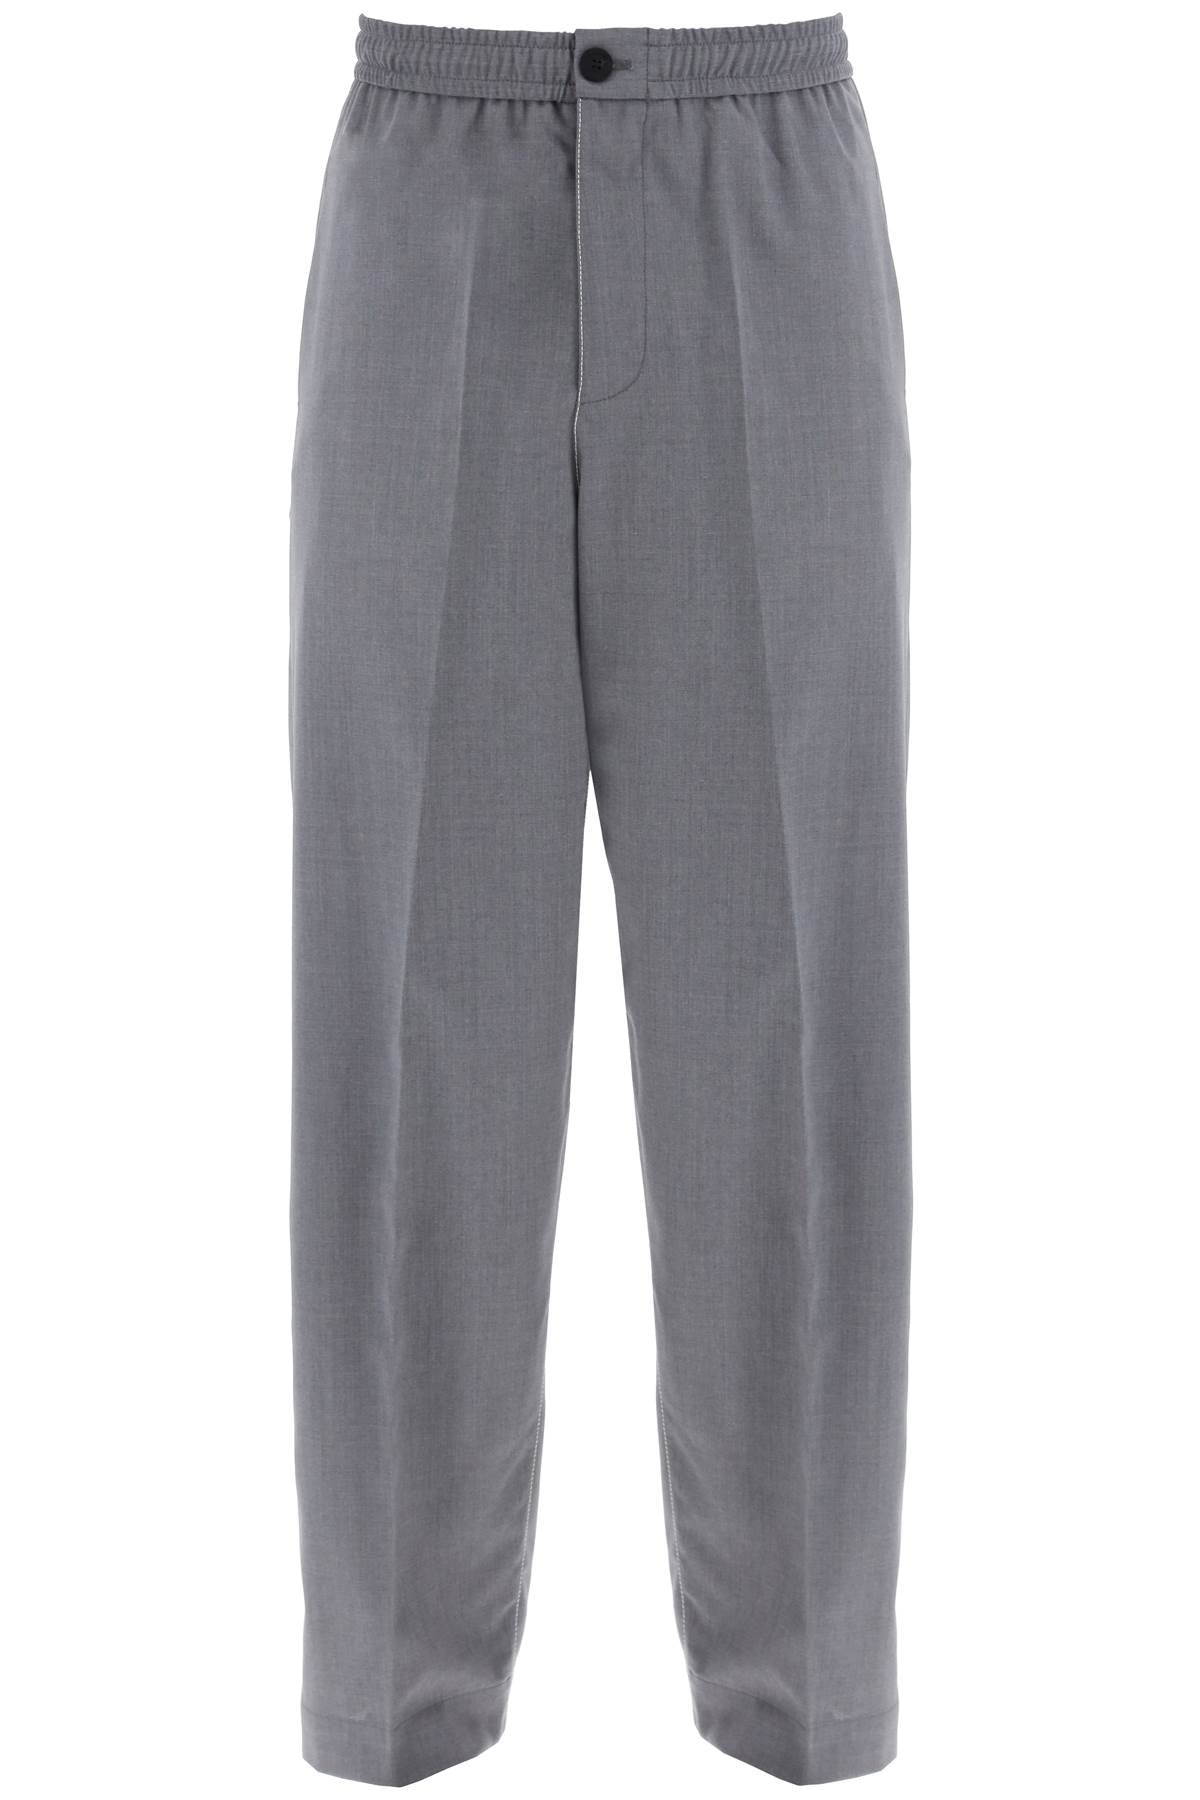 FERRAGAMO Men's Lightweight Wool Tailored Trousers in Canvas Fabric - FW24